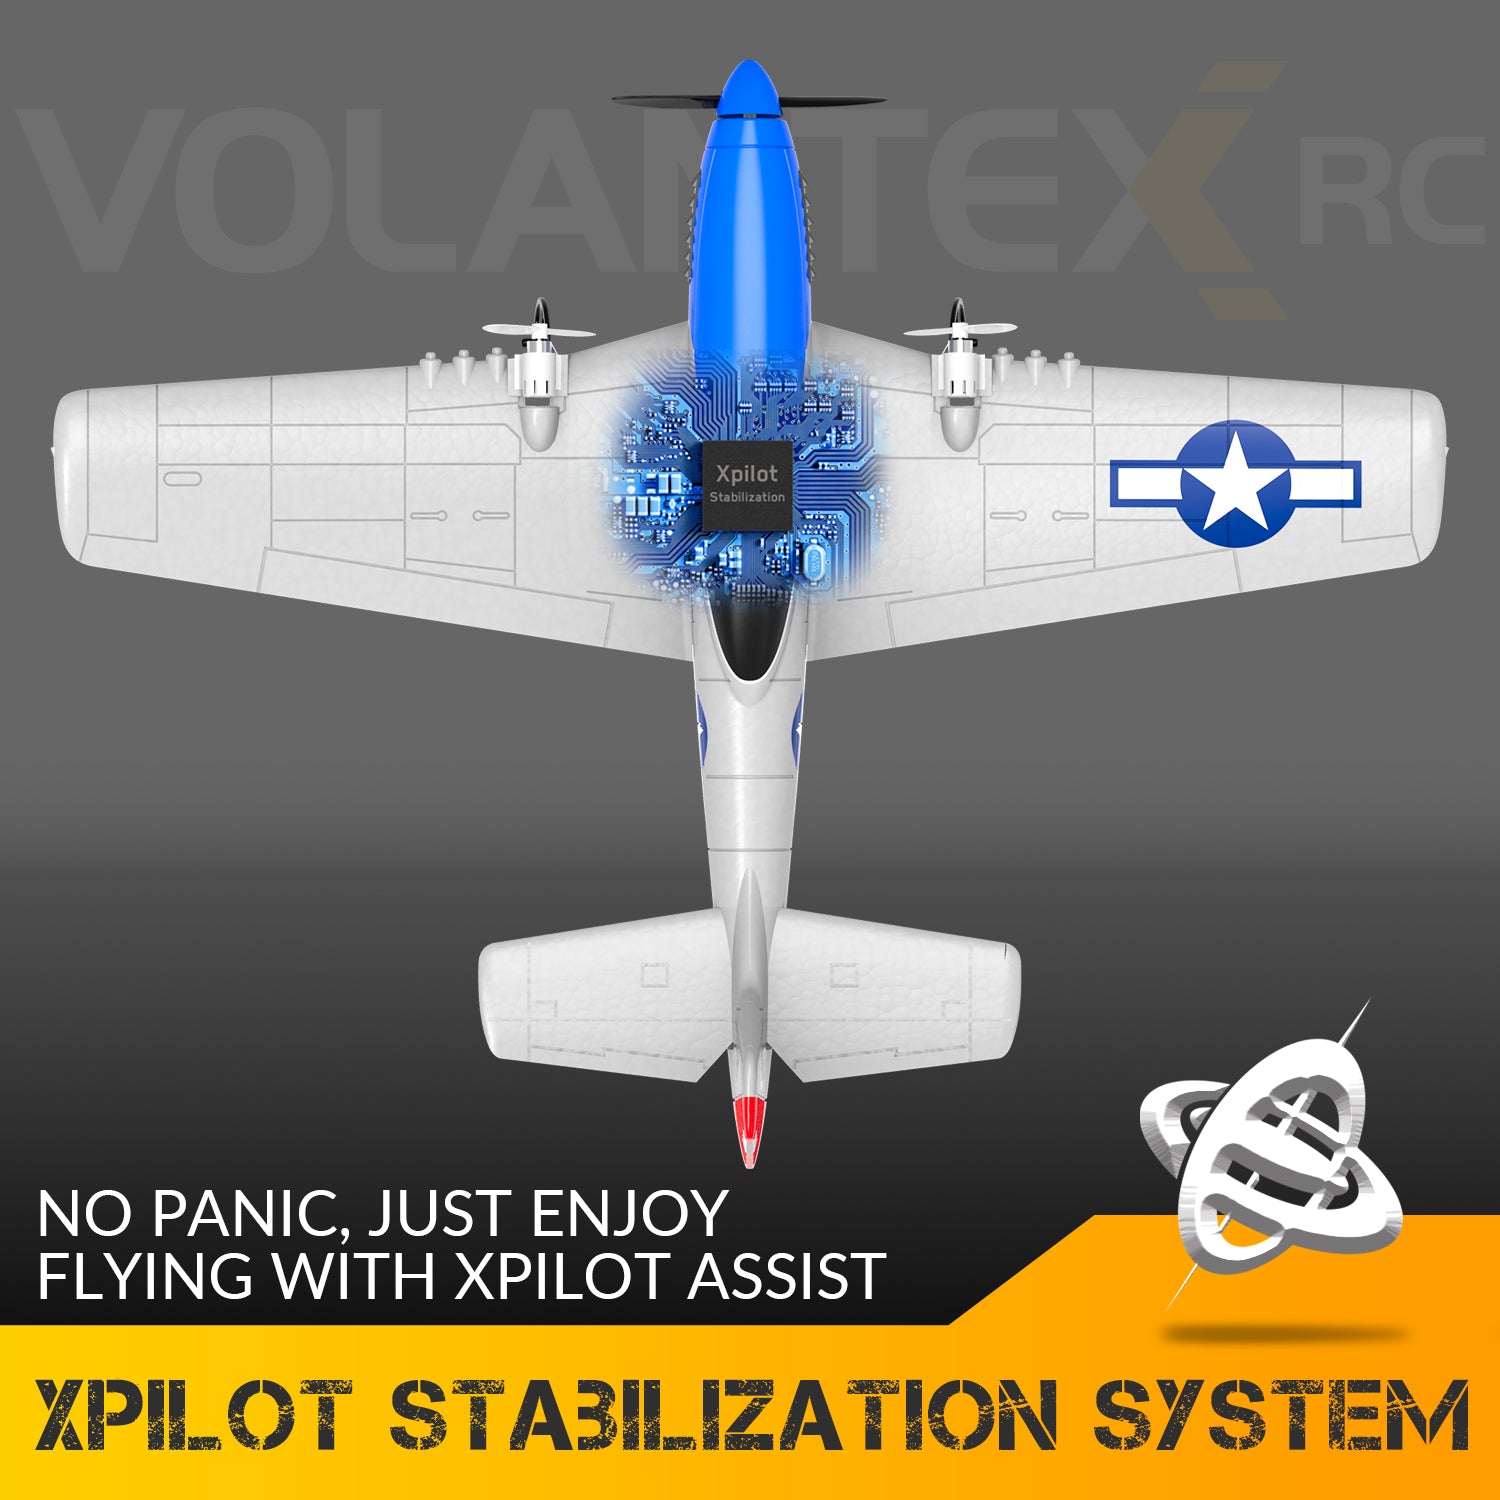 VOLANTEXRC P51D Mustang 2 Kanäle RC Einsteigerflugzeug mit Gyro-Stabilisator Easy Fly